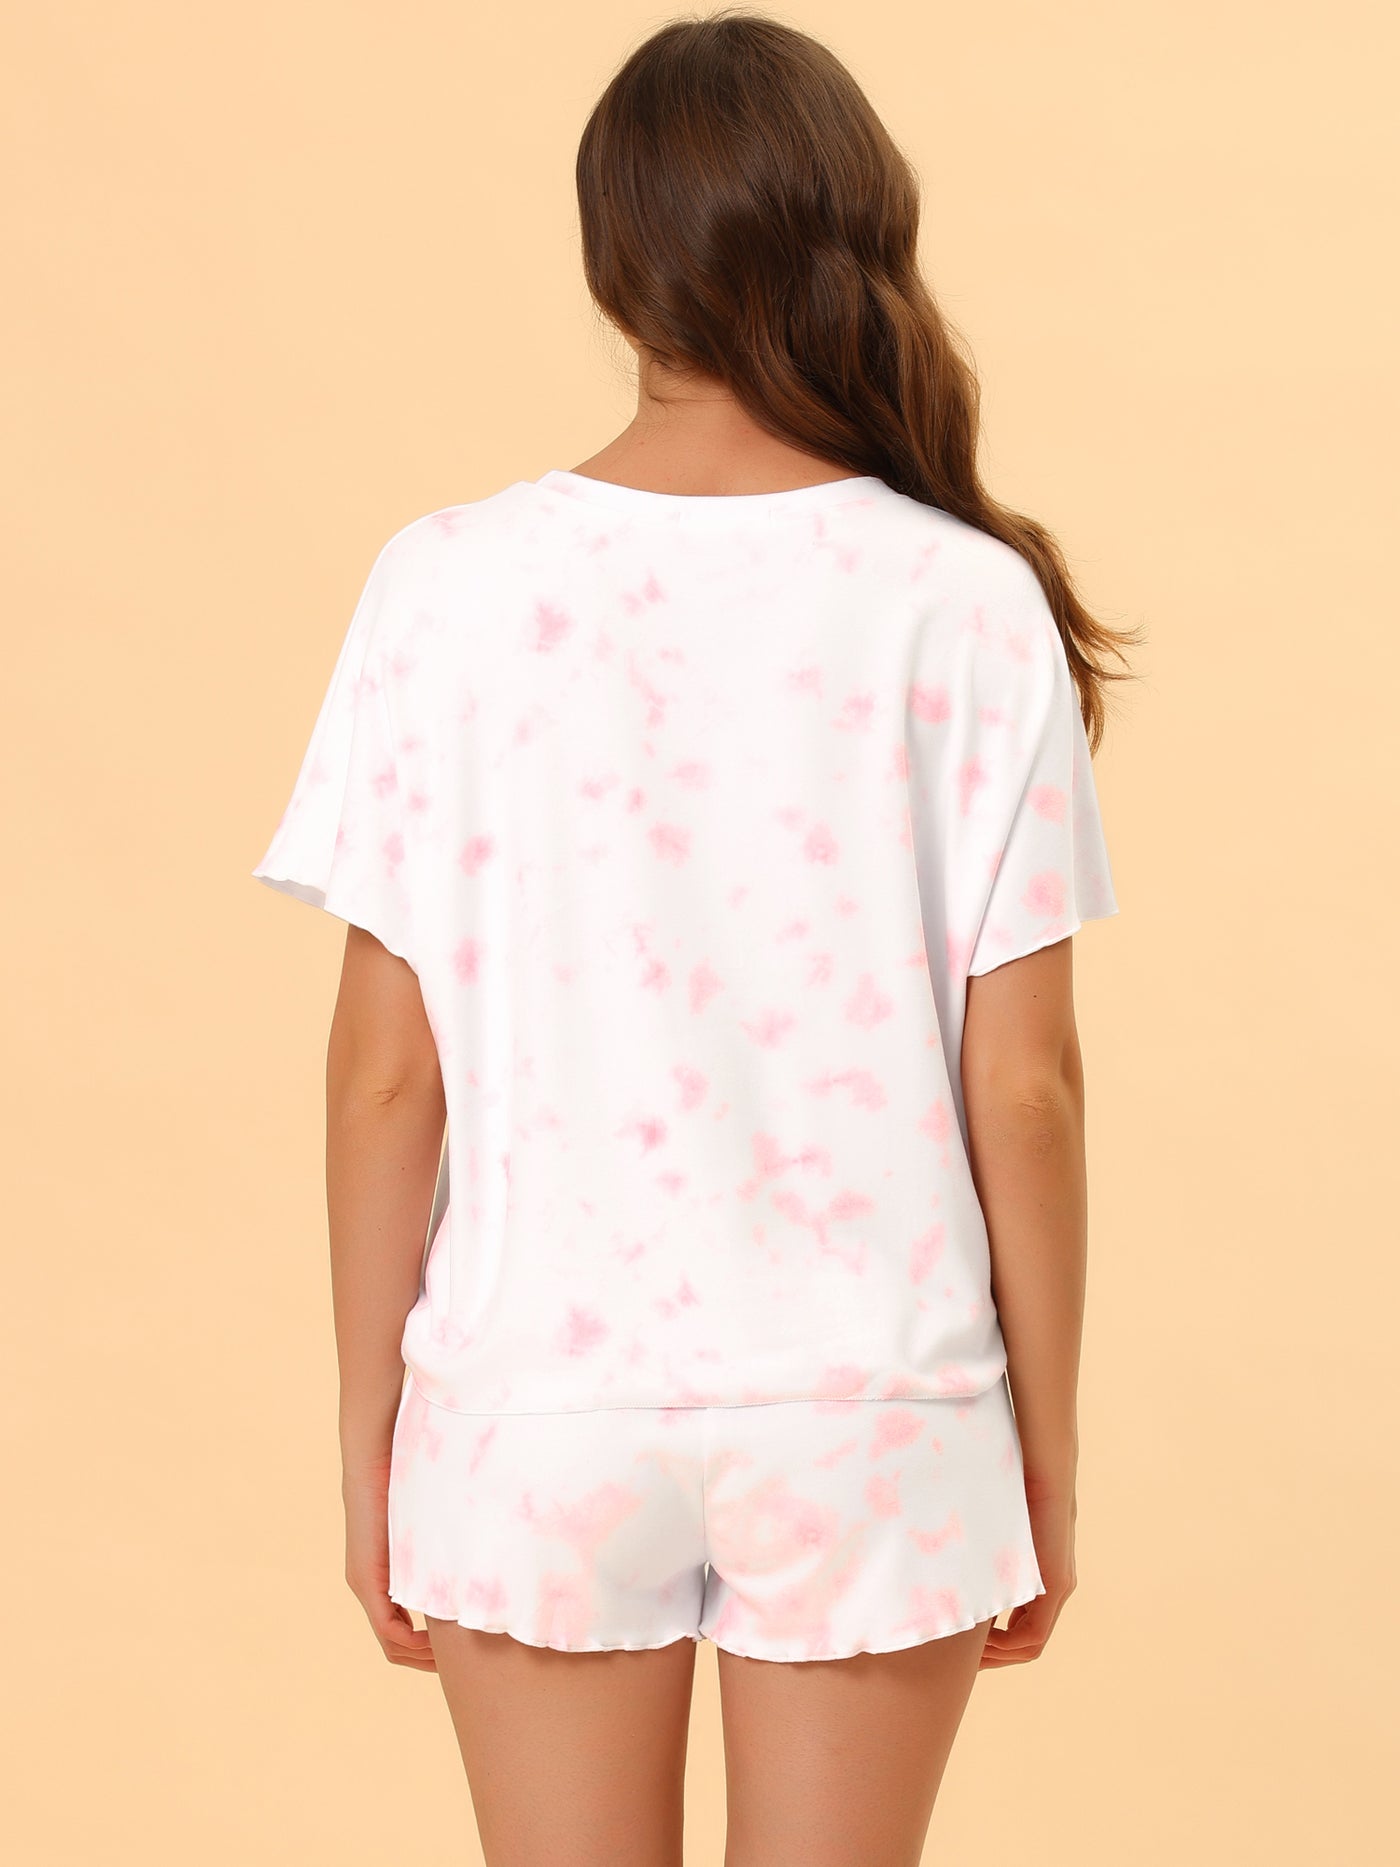 Bublédon Women's Dye Print Short Sleeves and Shorts 2pcs Lounge Pajama Sets